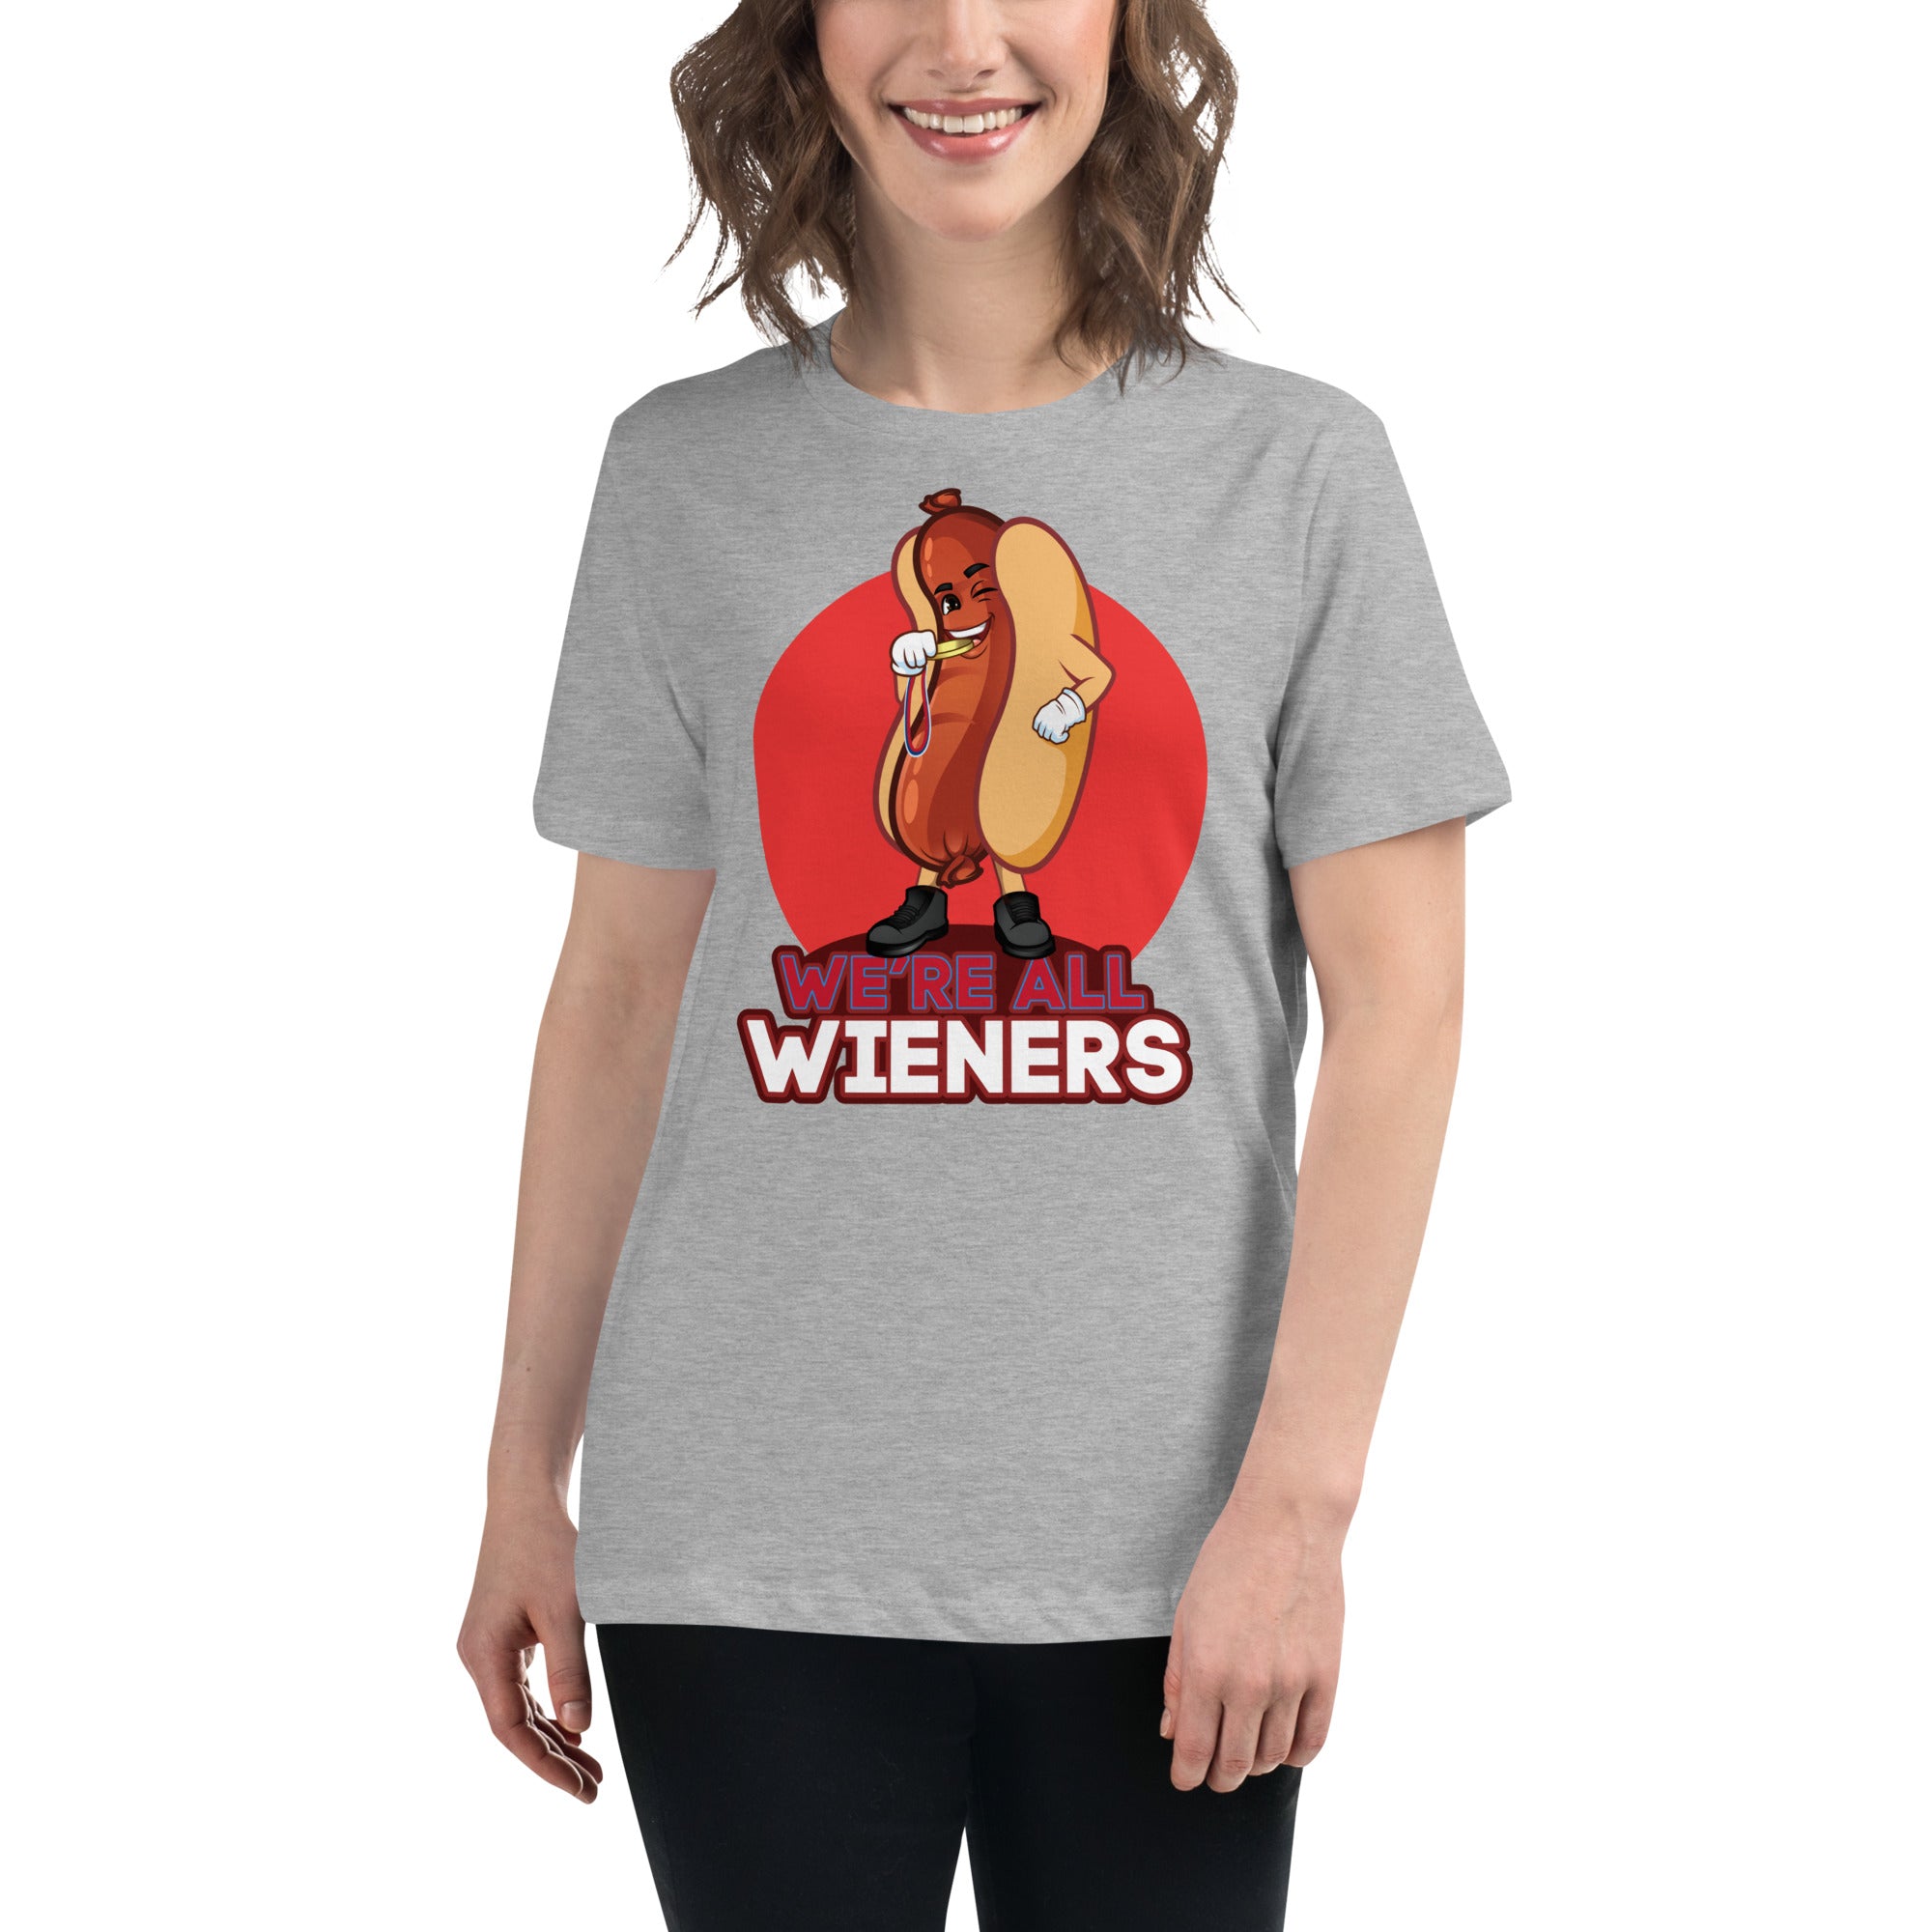 We're All Wiener's Women's Premium Fit T-Shirt - Red